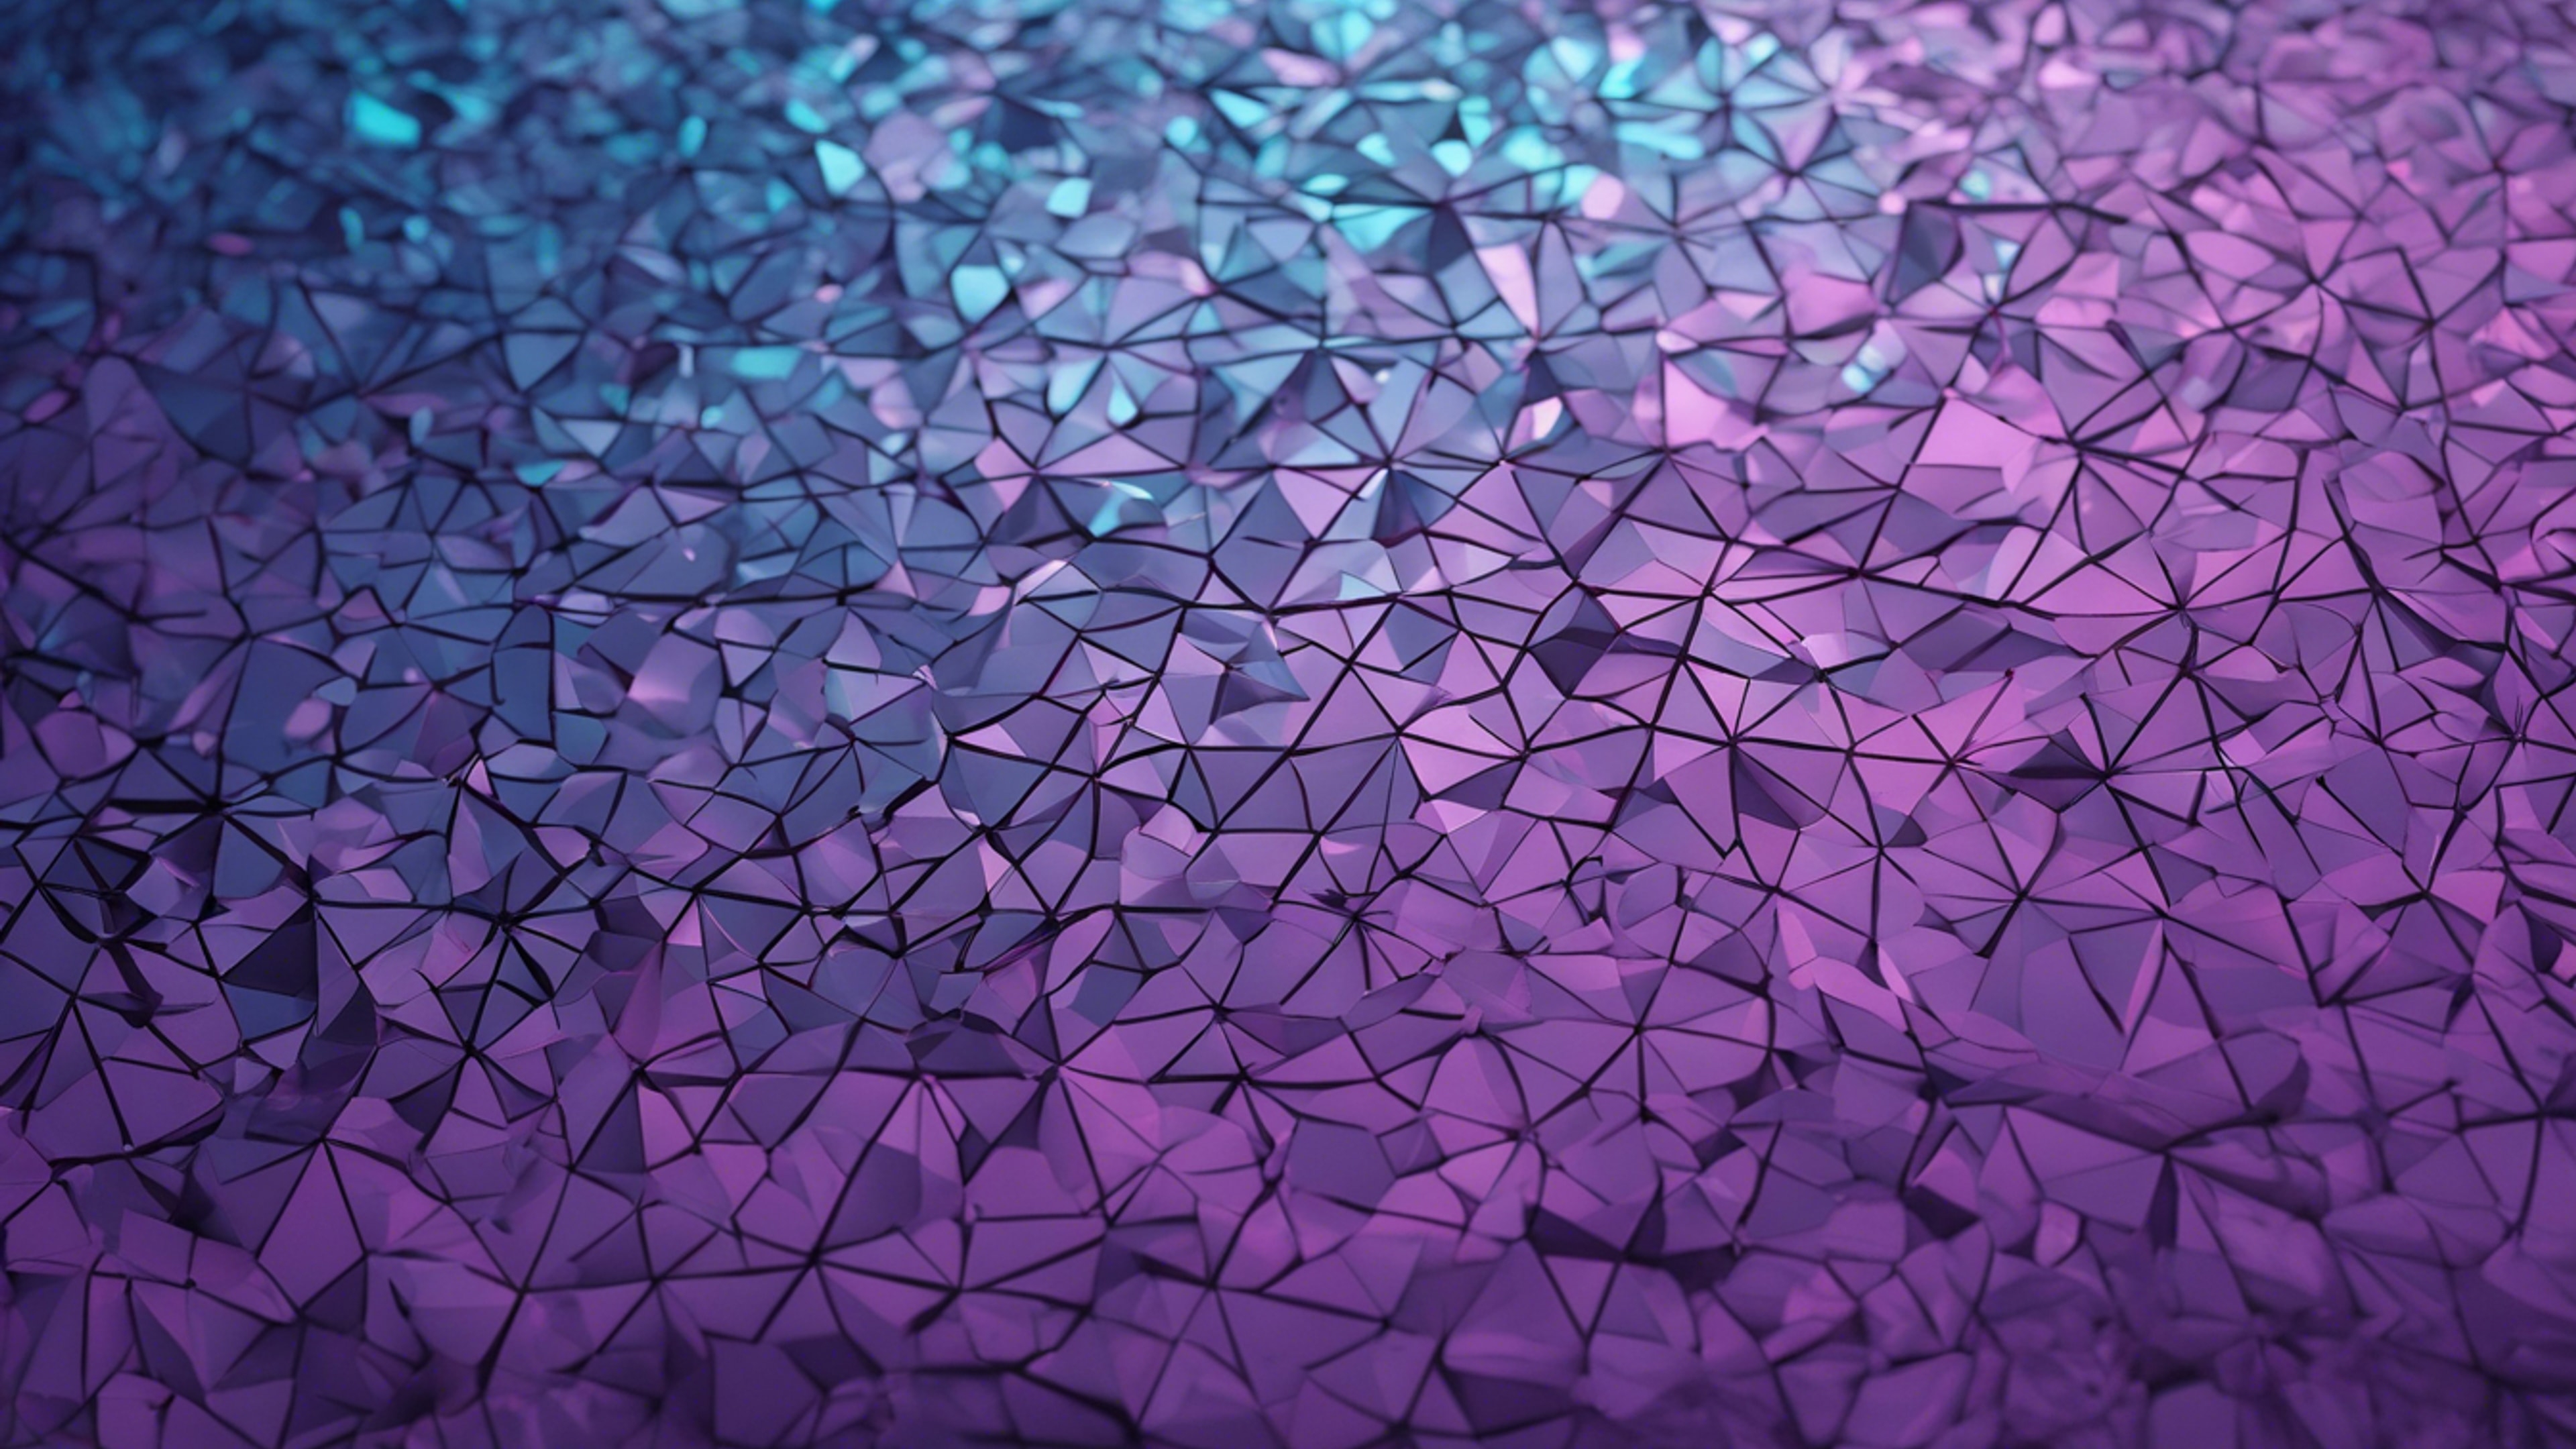 A minimalistic geometric pattern with gradients of cool blues and rich purples. Tapeta[0965c8f37dc94faa9227]